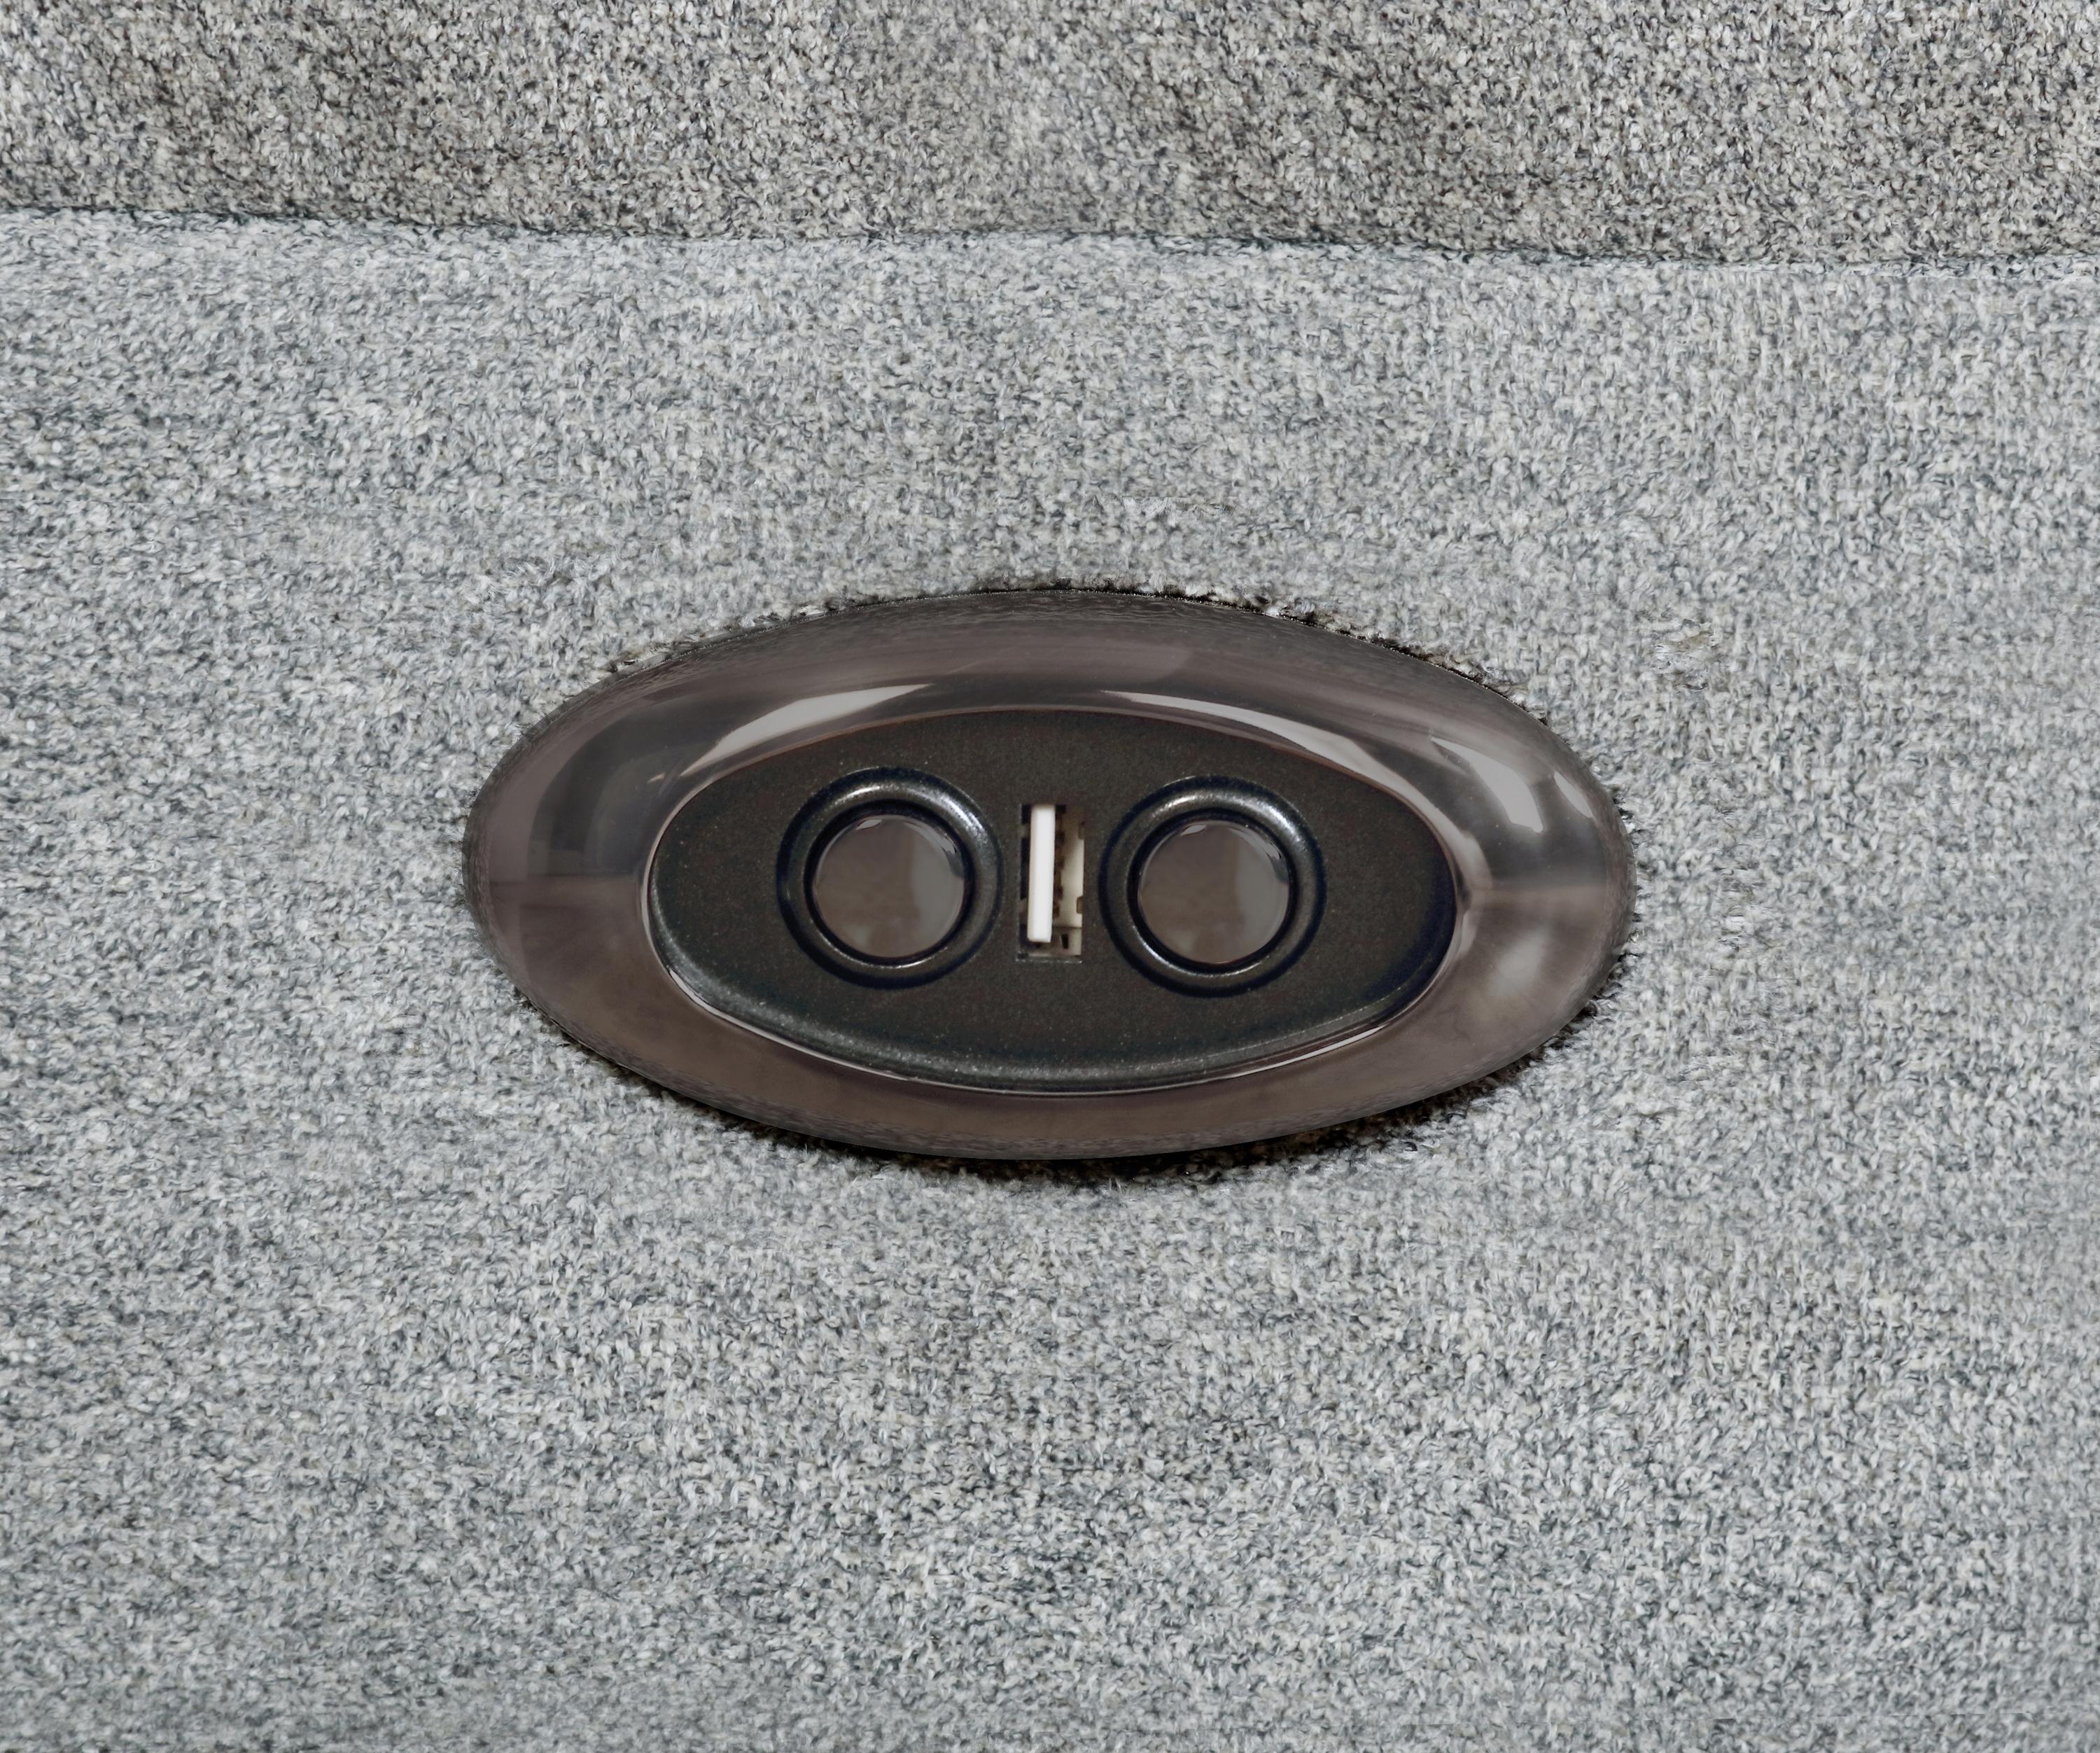 

    
602561-S2 Modern Gray Performance Fabric Motion Sofa Set 2pcs Coaster 602561-S2 Waterbury
